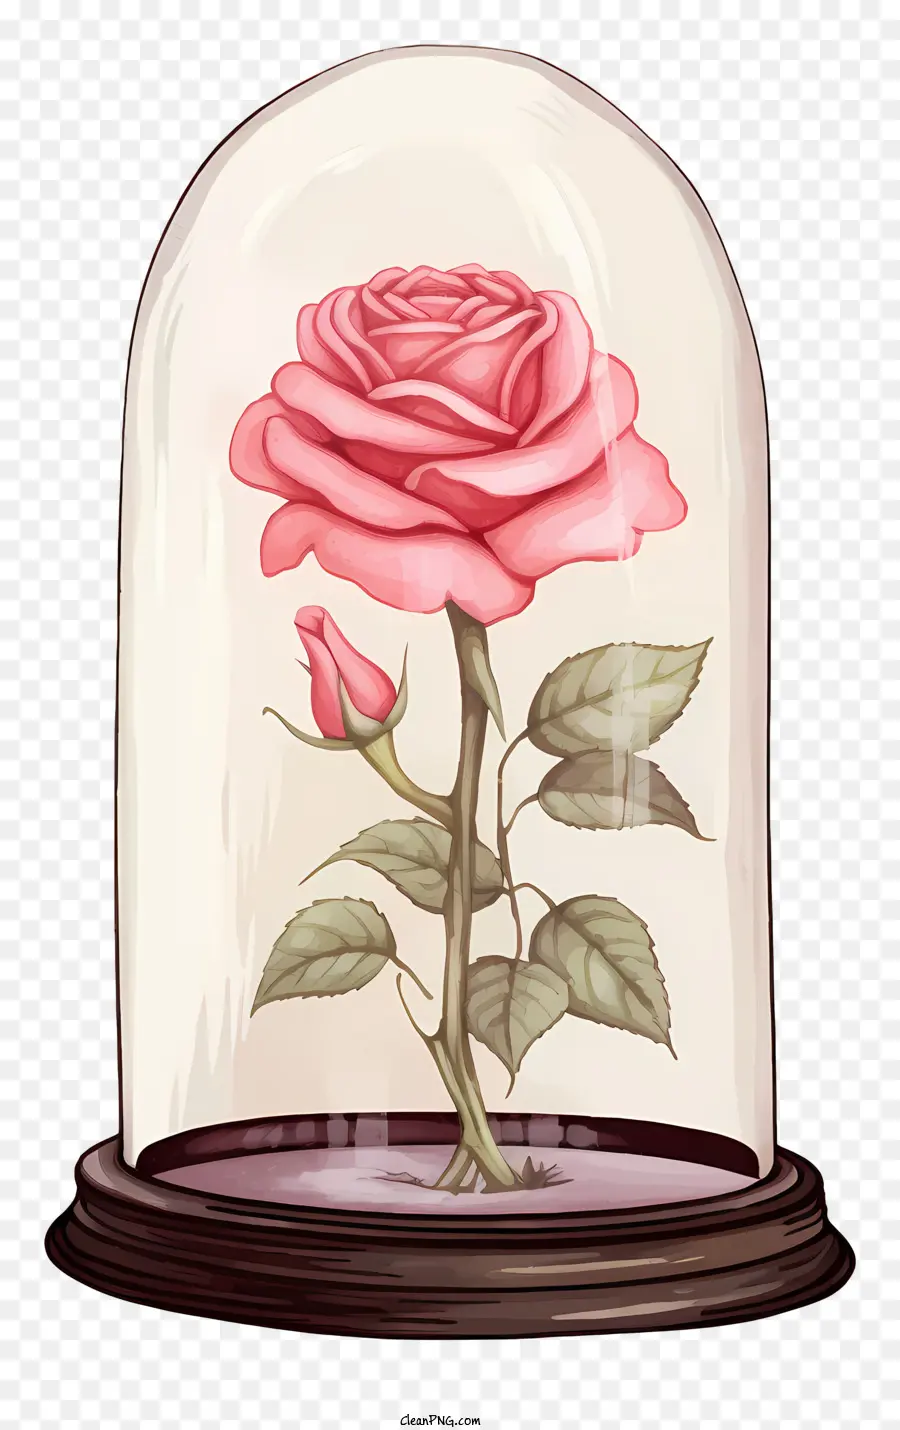 rosa - Rosa in campana su una superficie nera